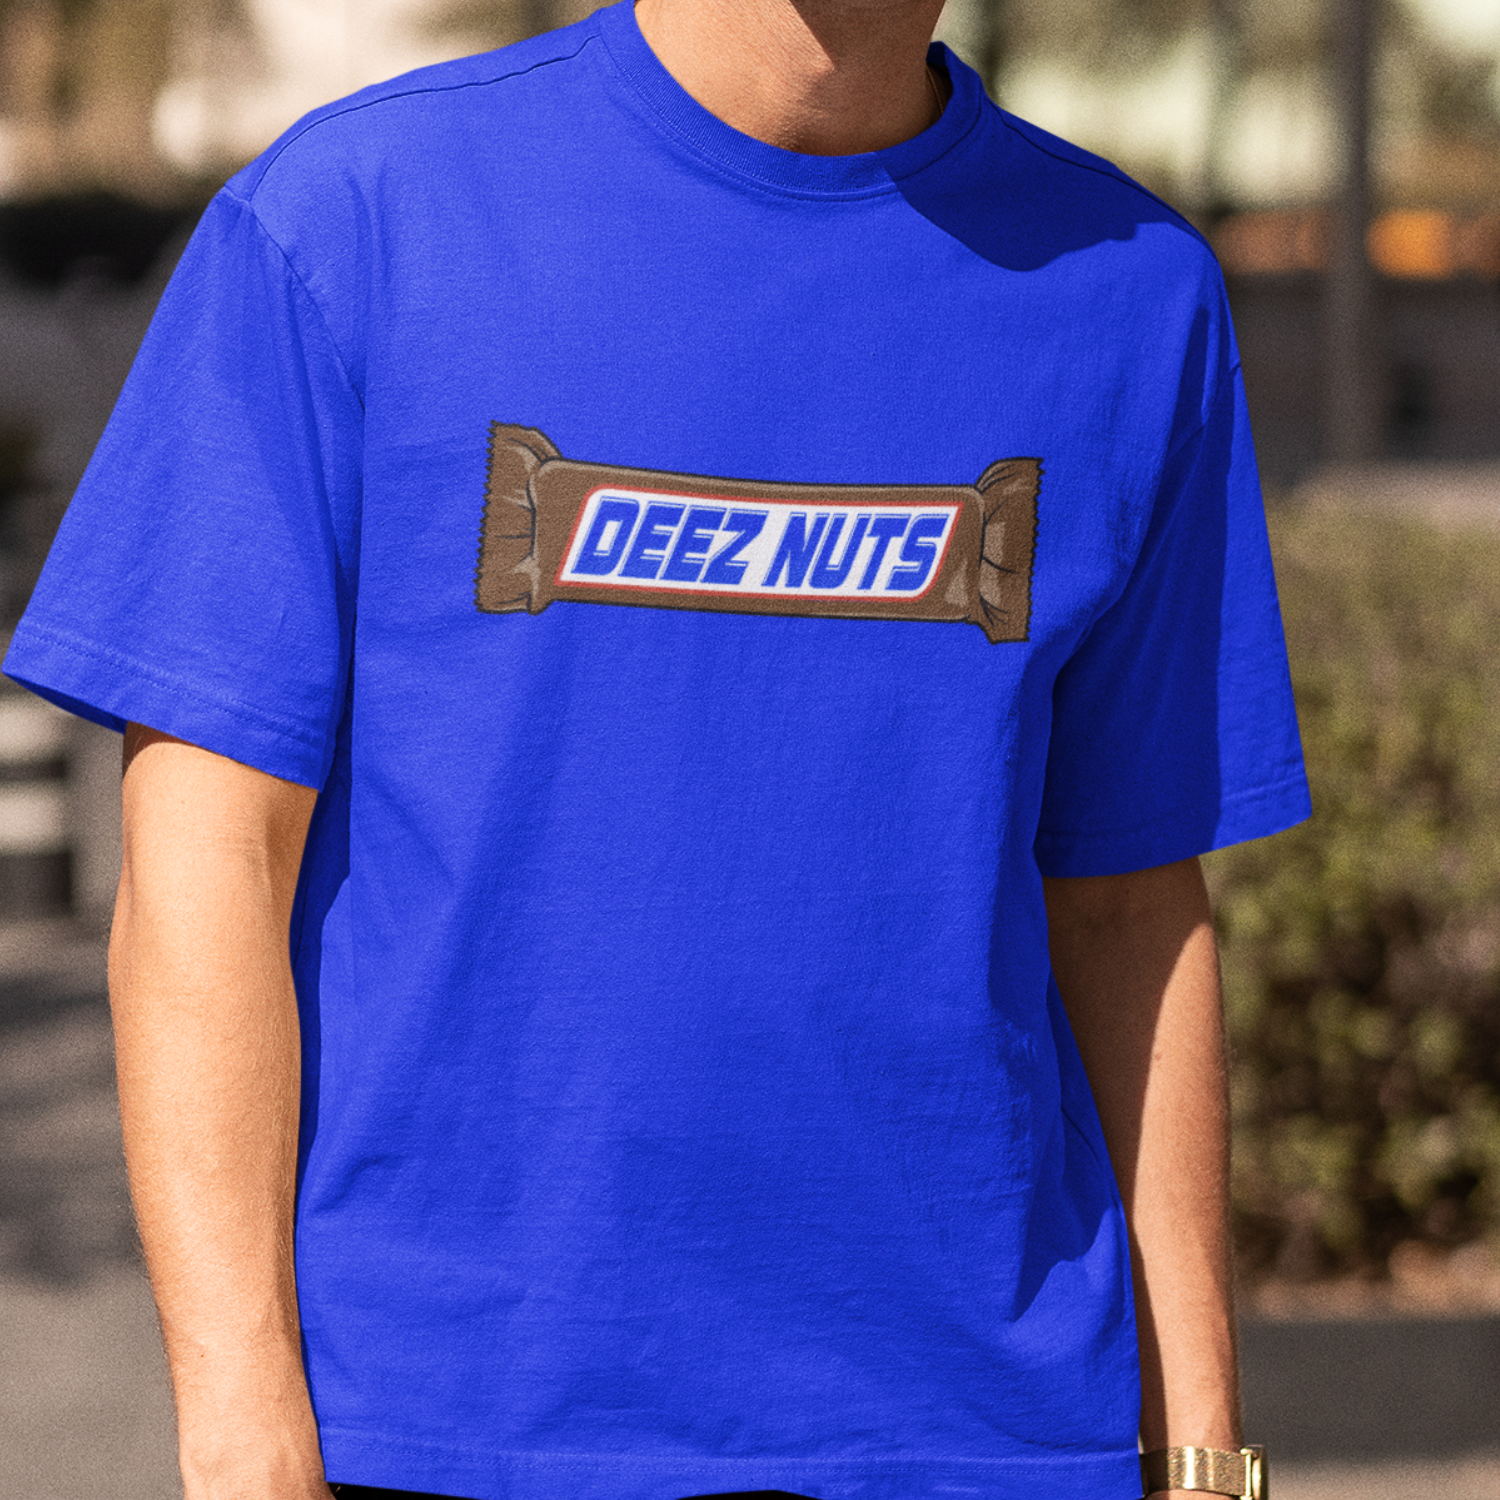 Deez Nuts T Shirt